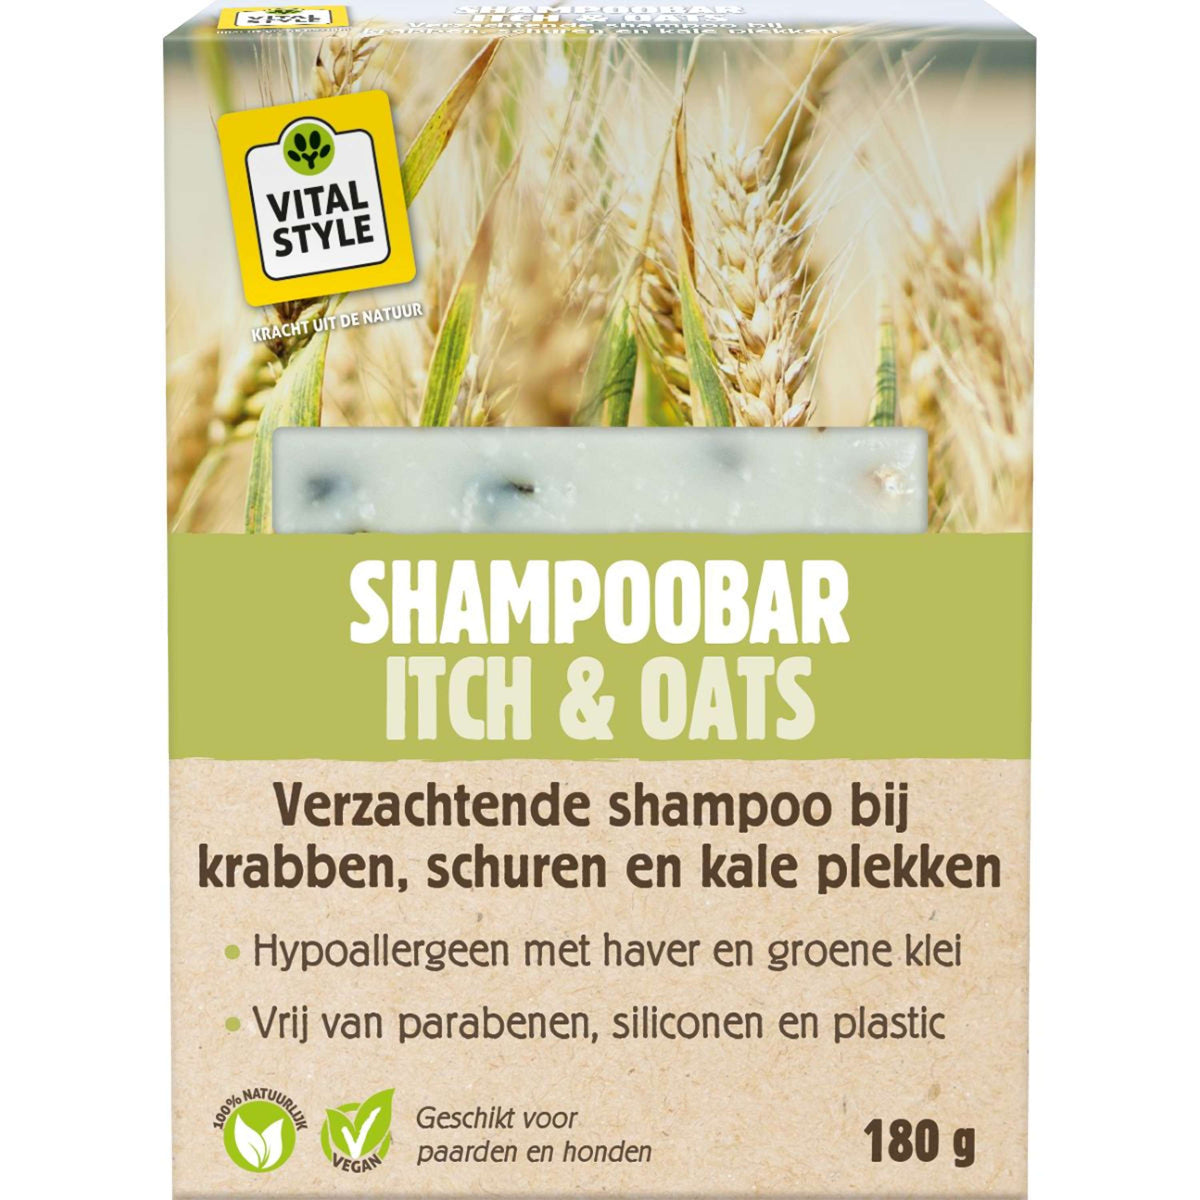 VITALstyle Shampoo Block Itch & Oats